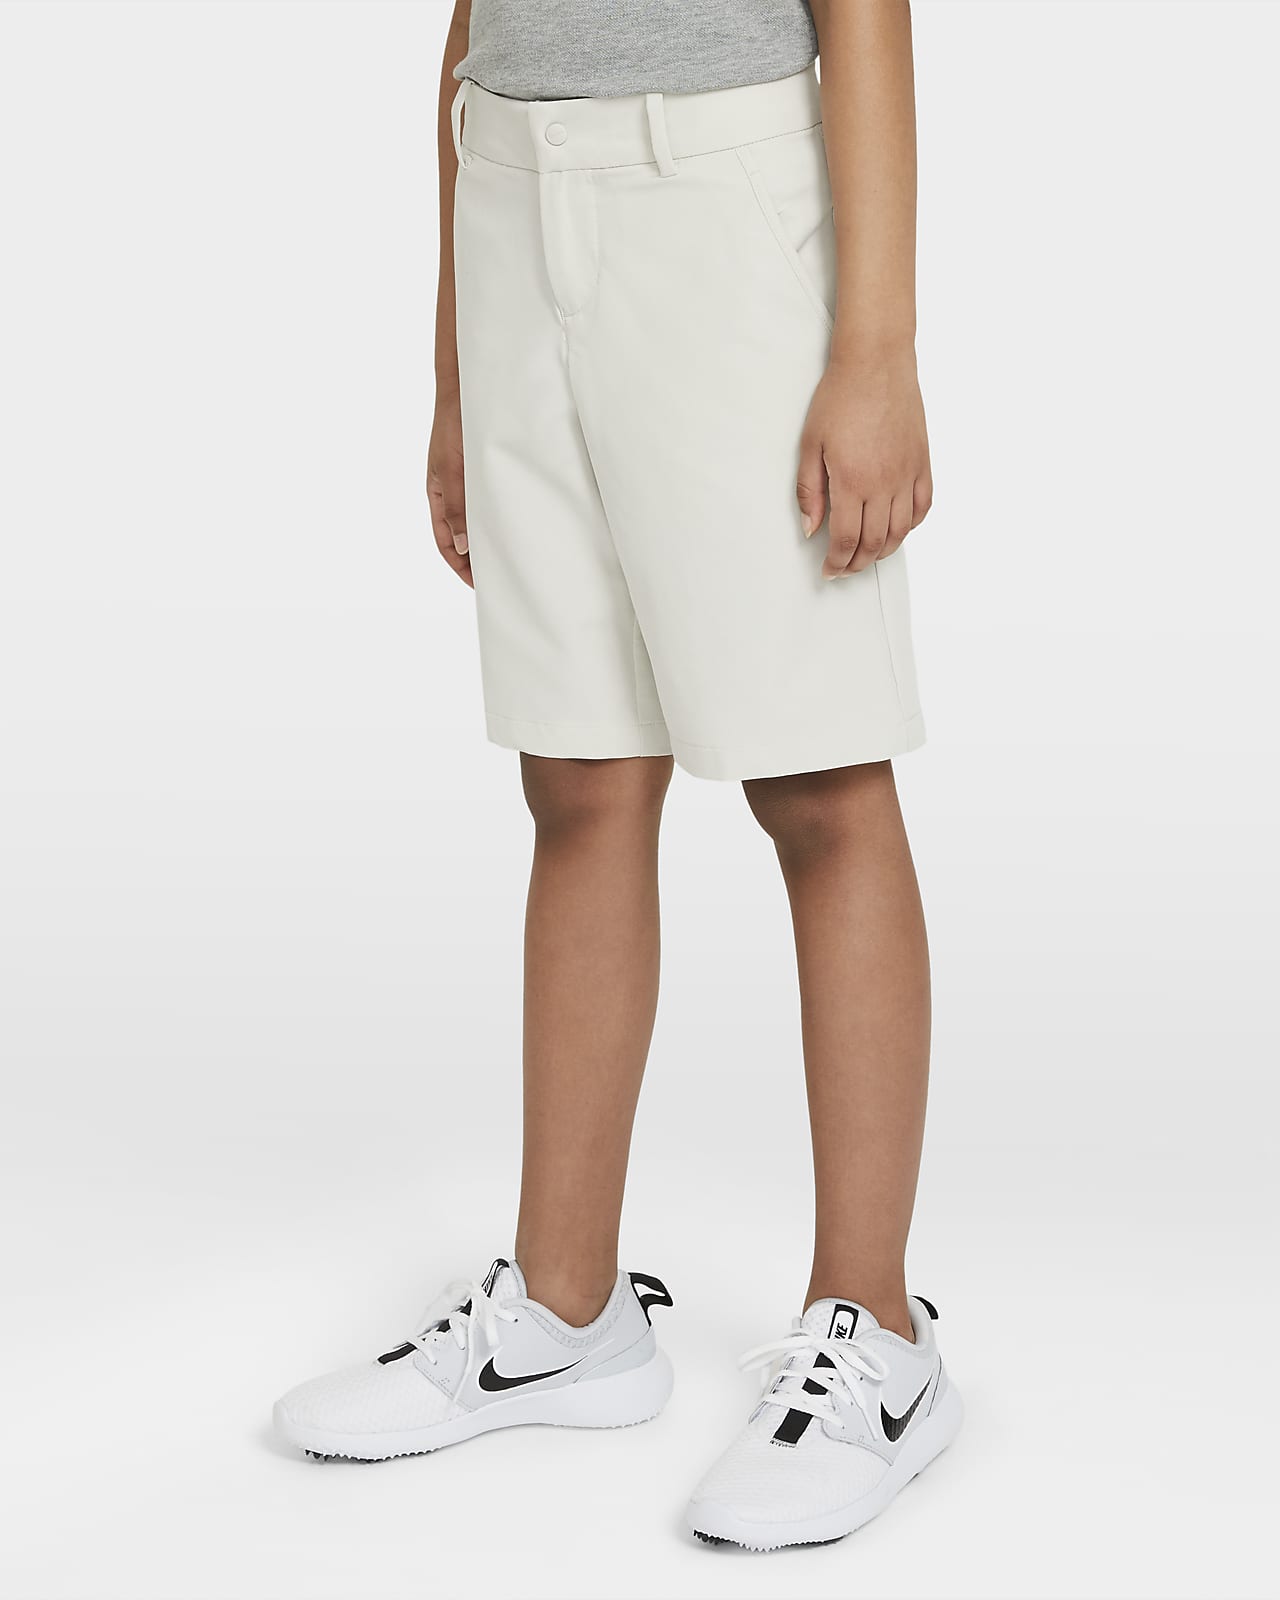 Nike Genç Çocuk (Erkek) Golf Şortu